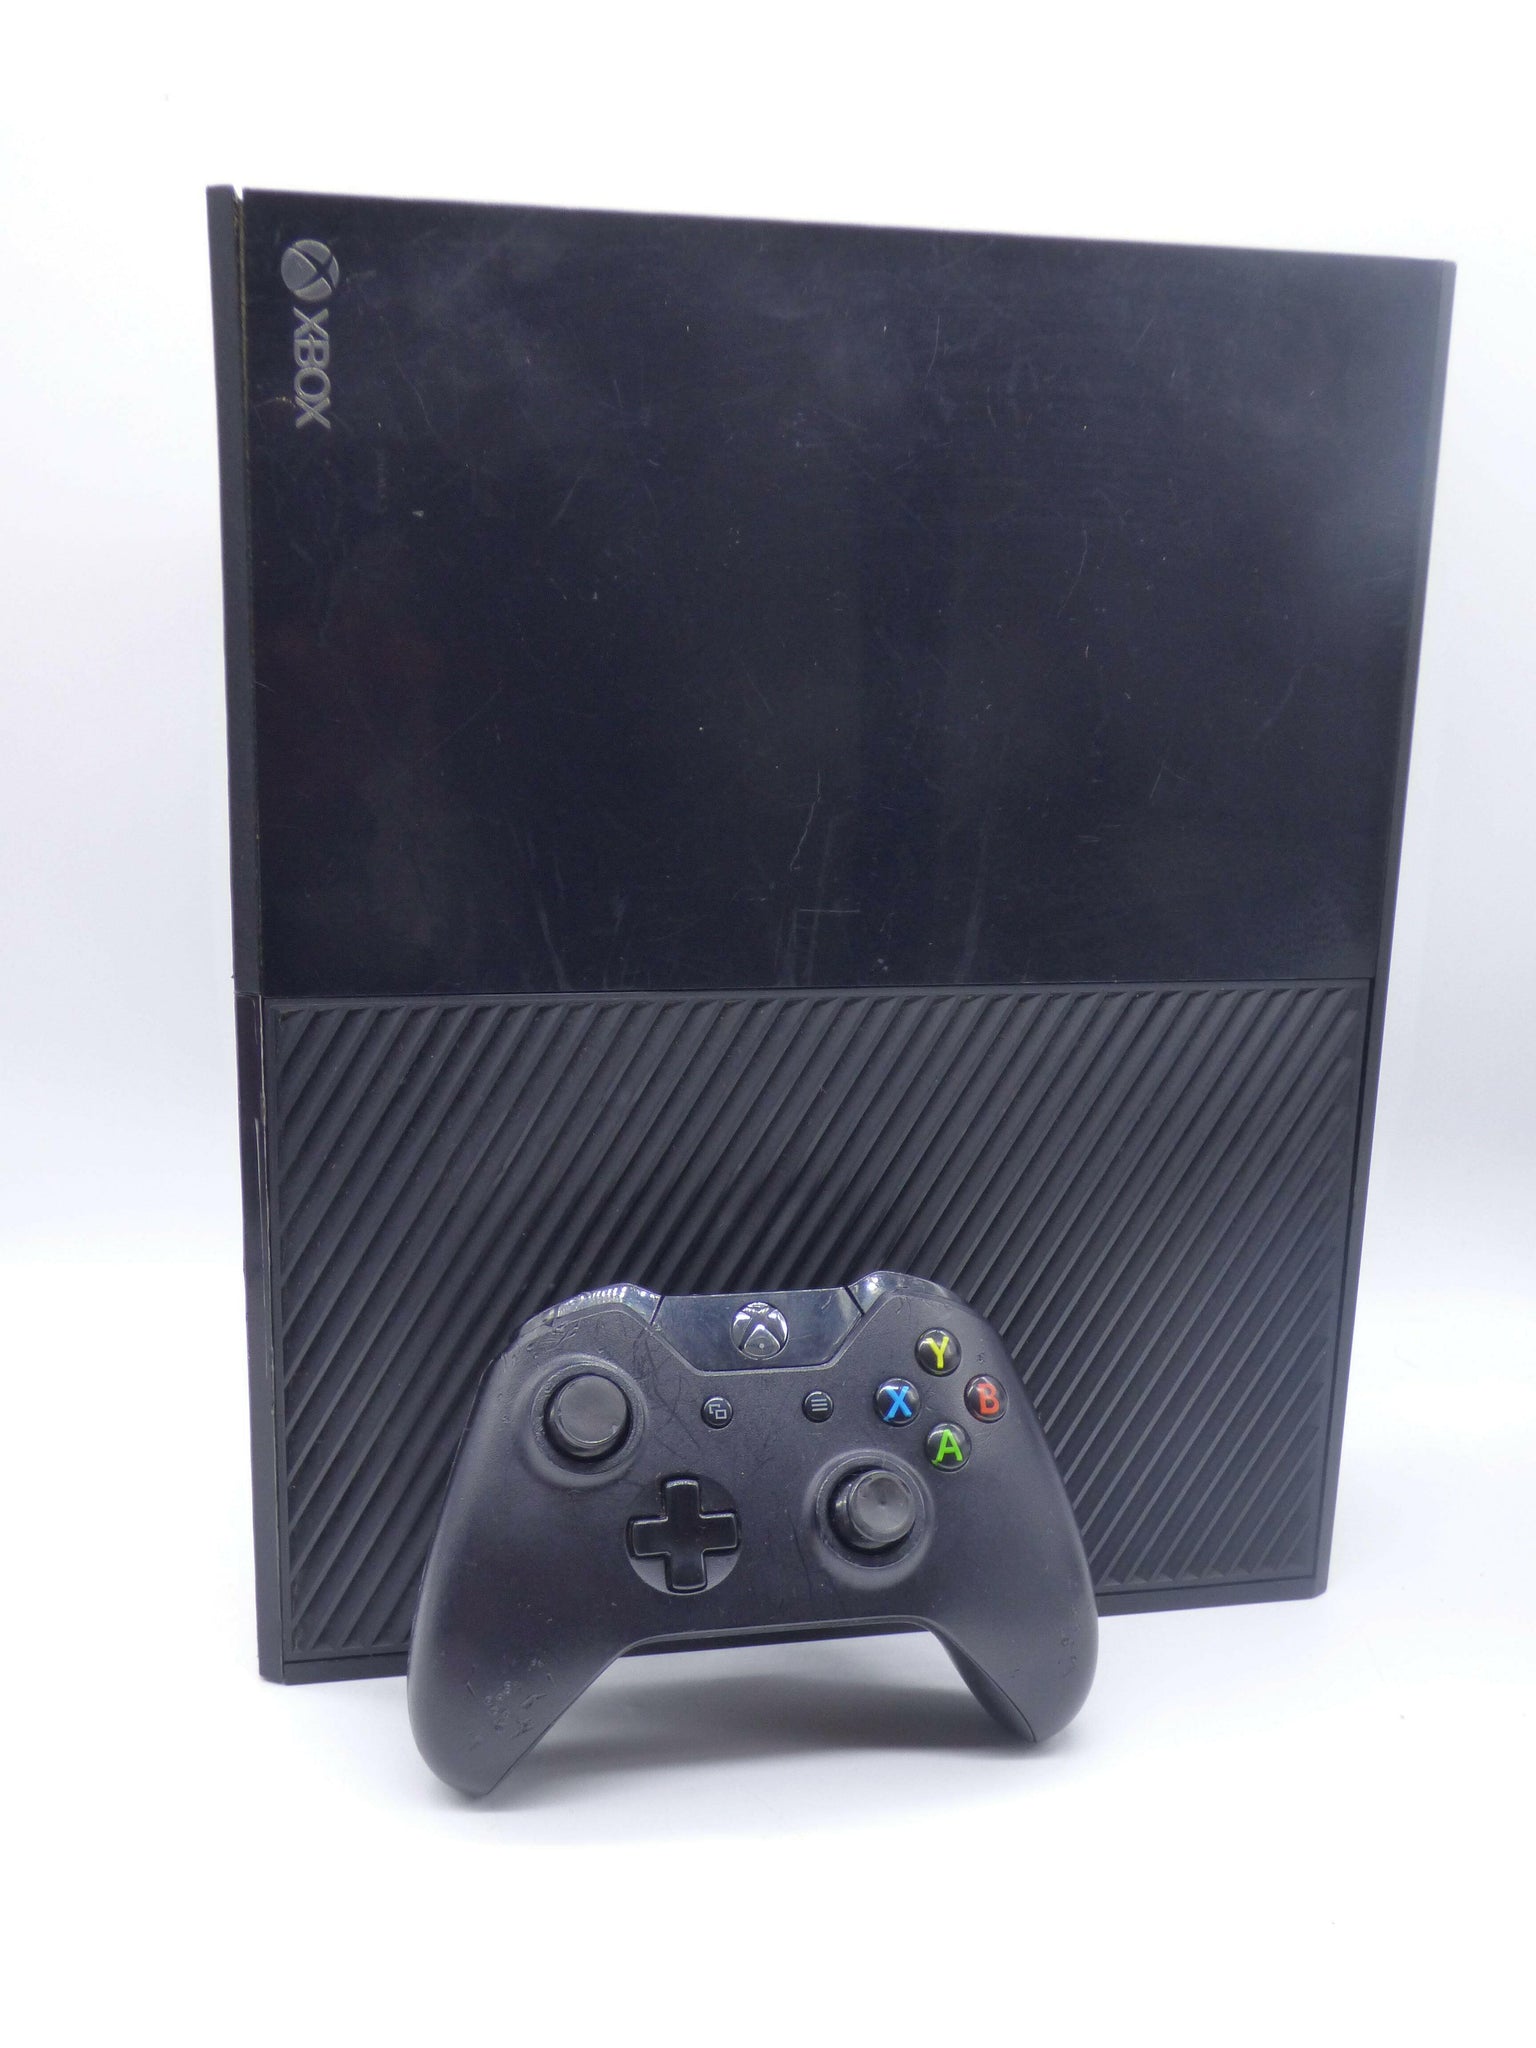 Microsoft Xbox One 500GB Console - Black